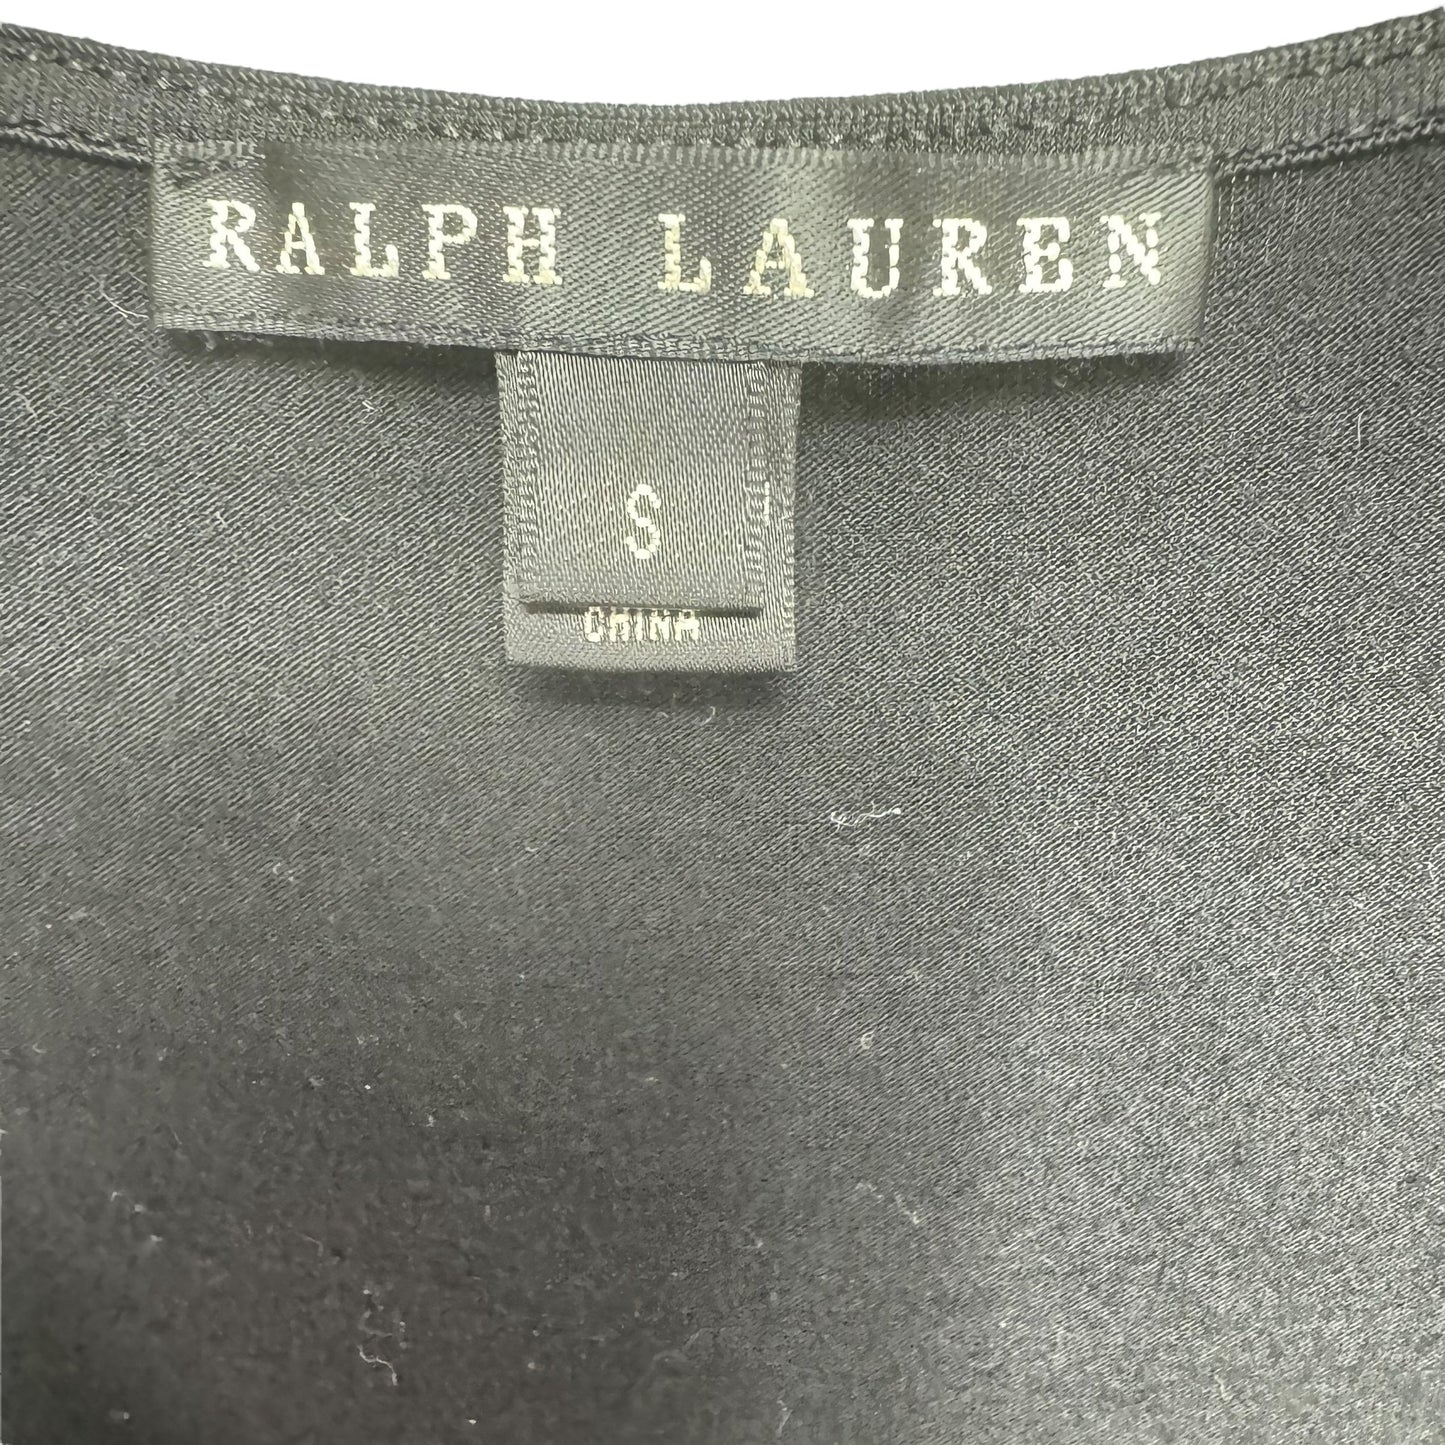 Black Dress Designer Ralph Lauren Black Label, Size S